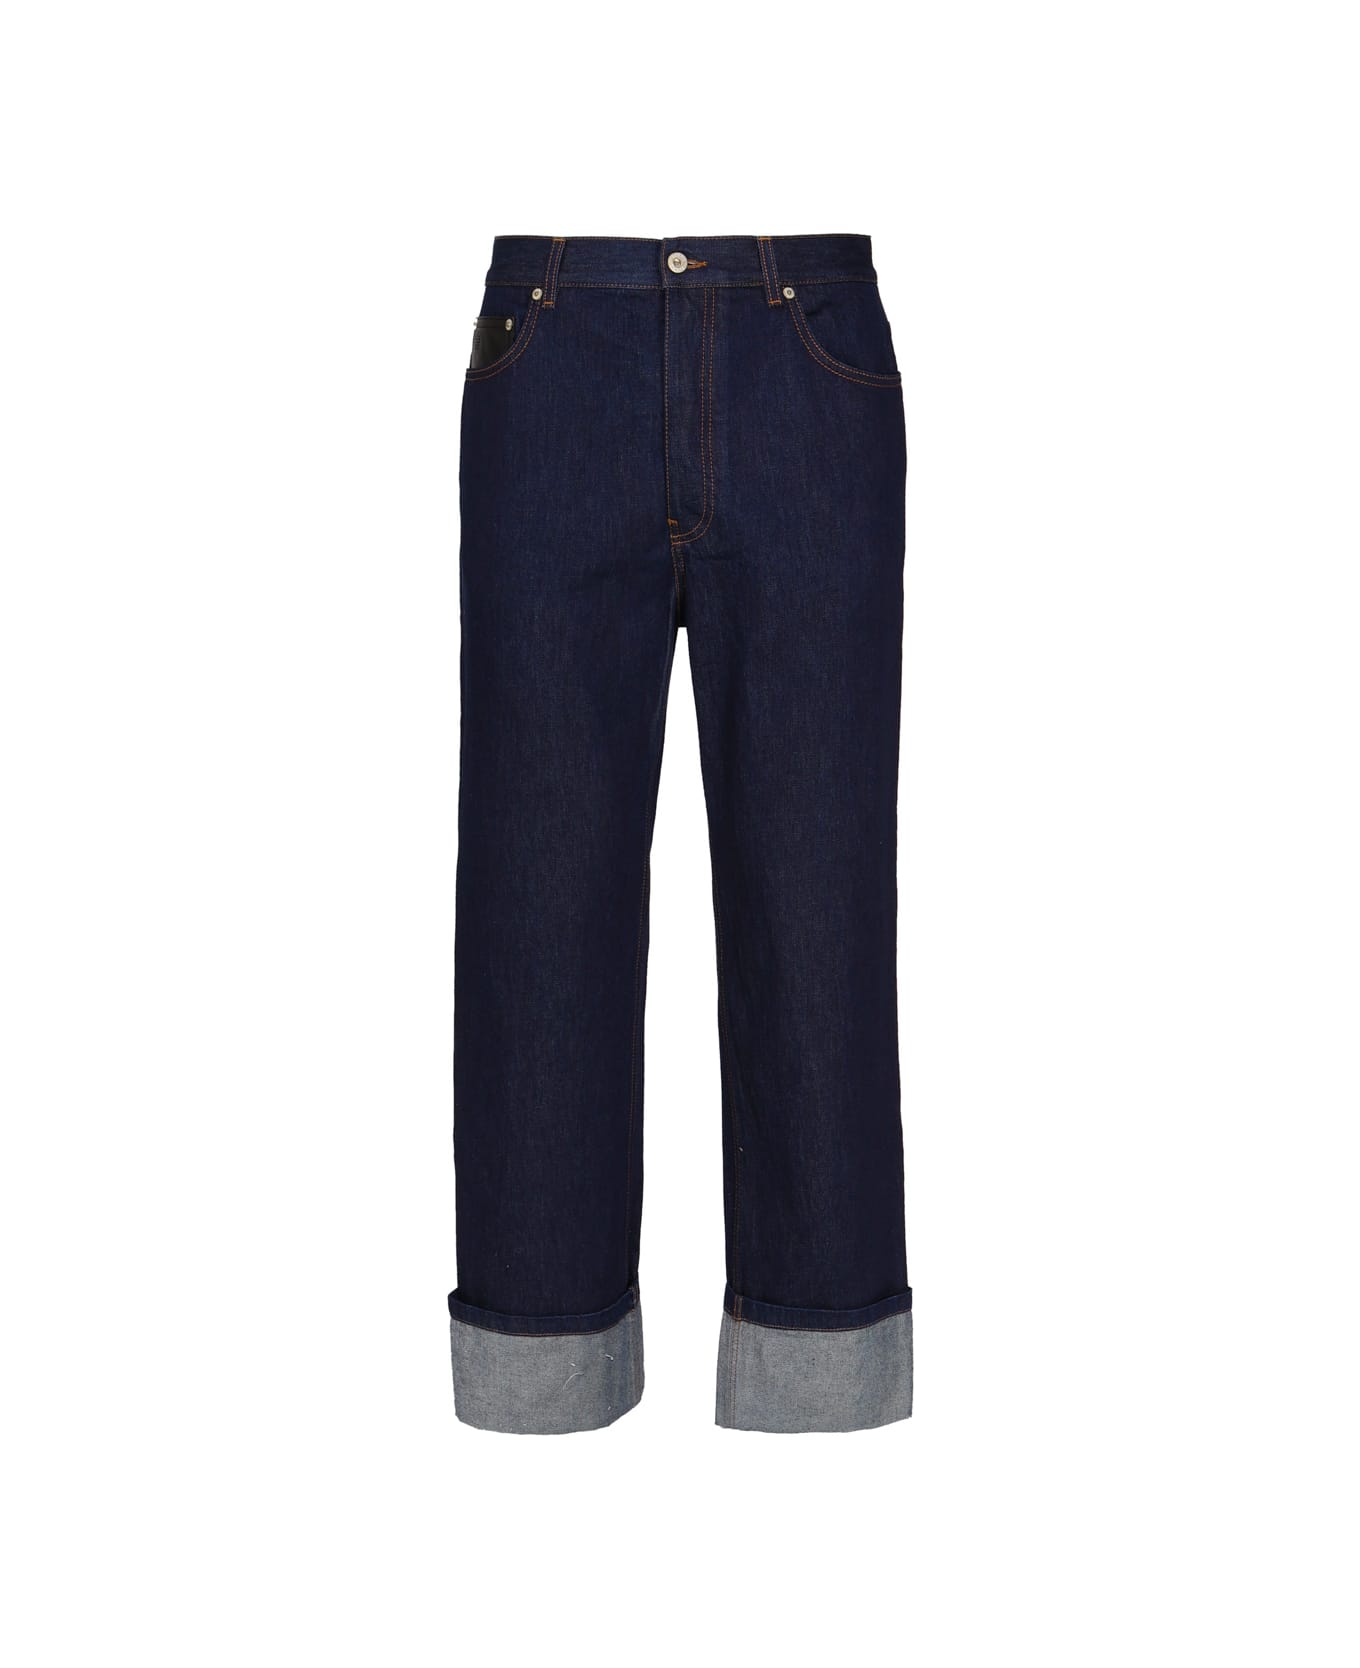 Loewe Fisherman Jeans In Denim With Turn-up - Indigo